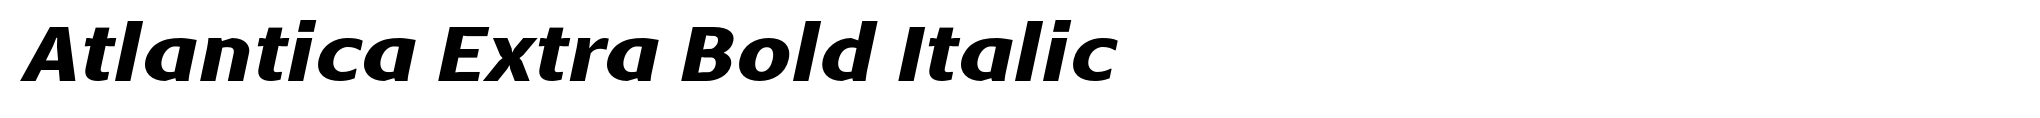 Atlantica Extra Bold Italic image